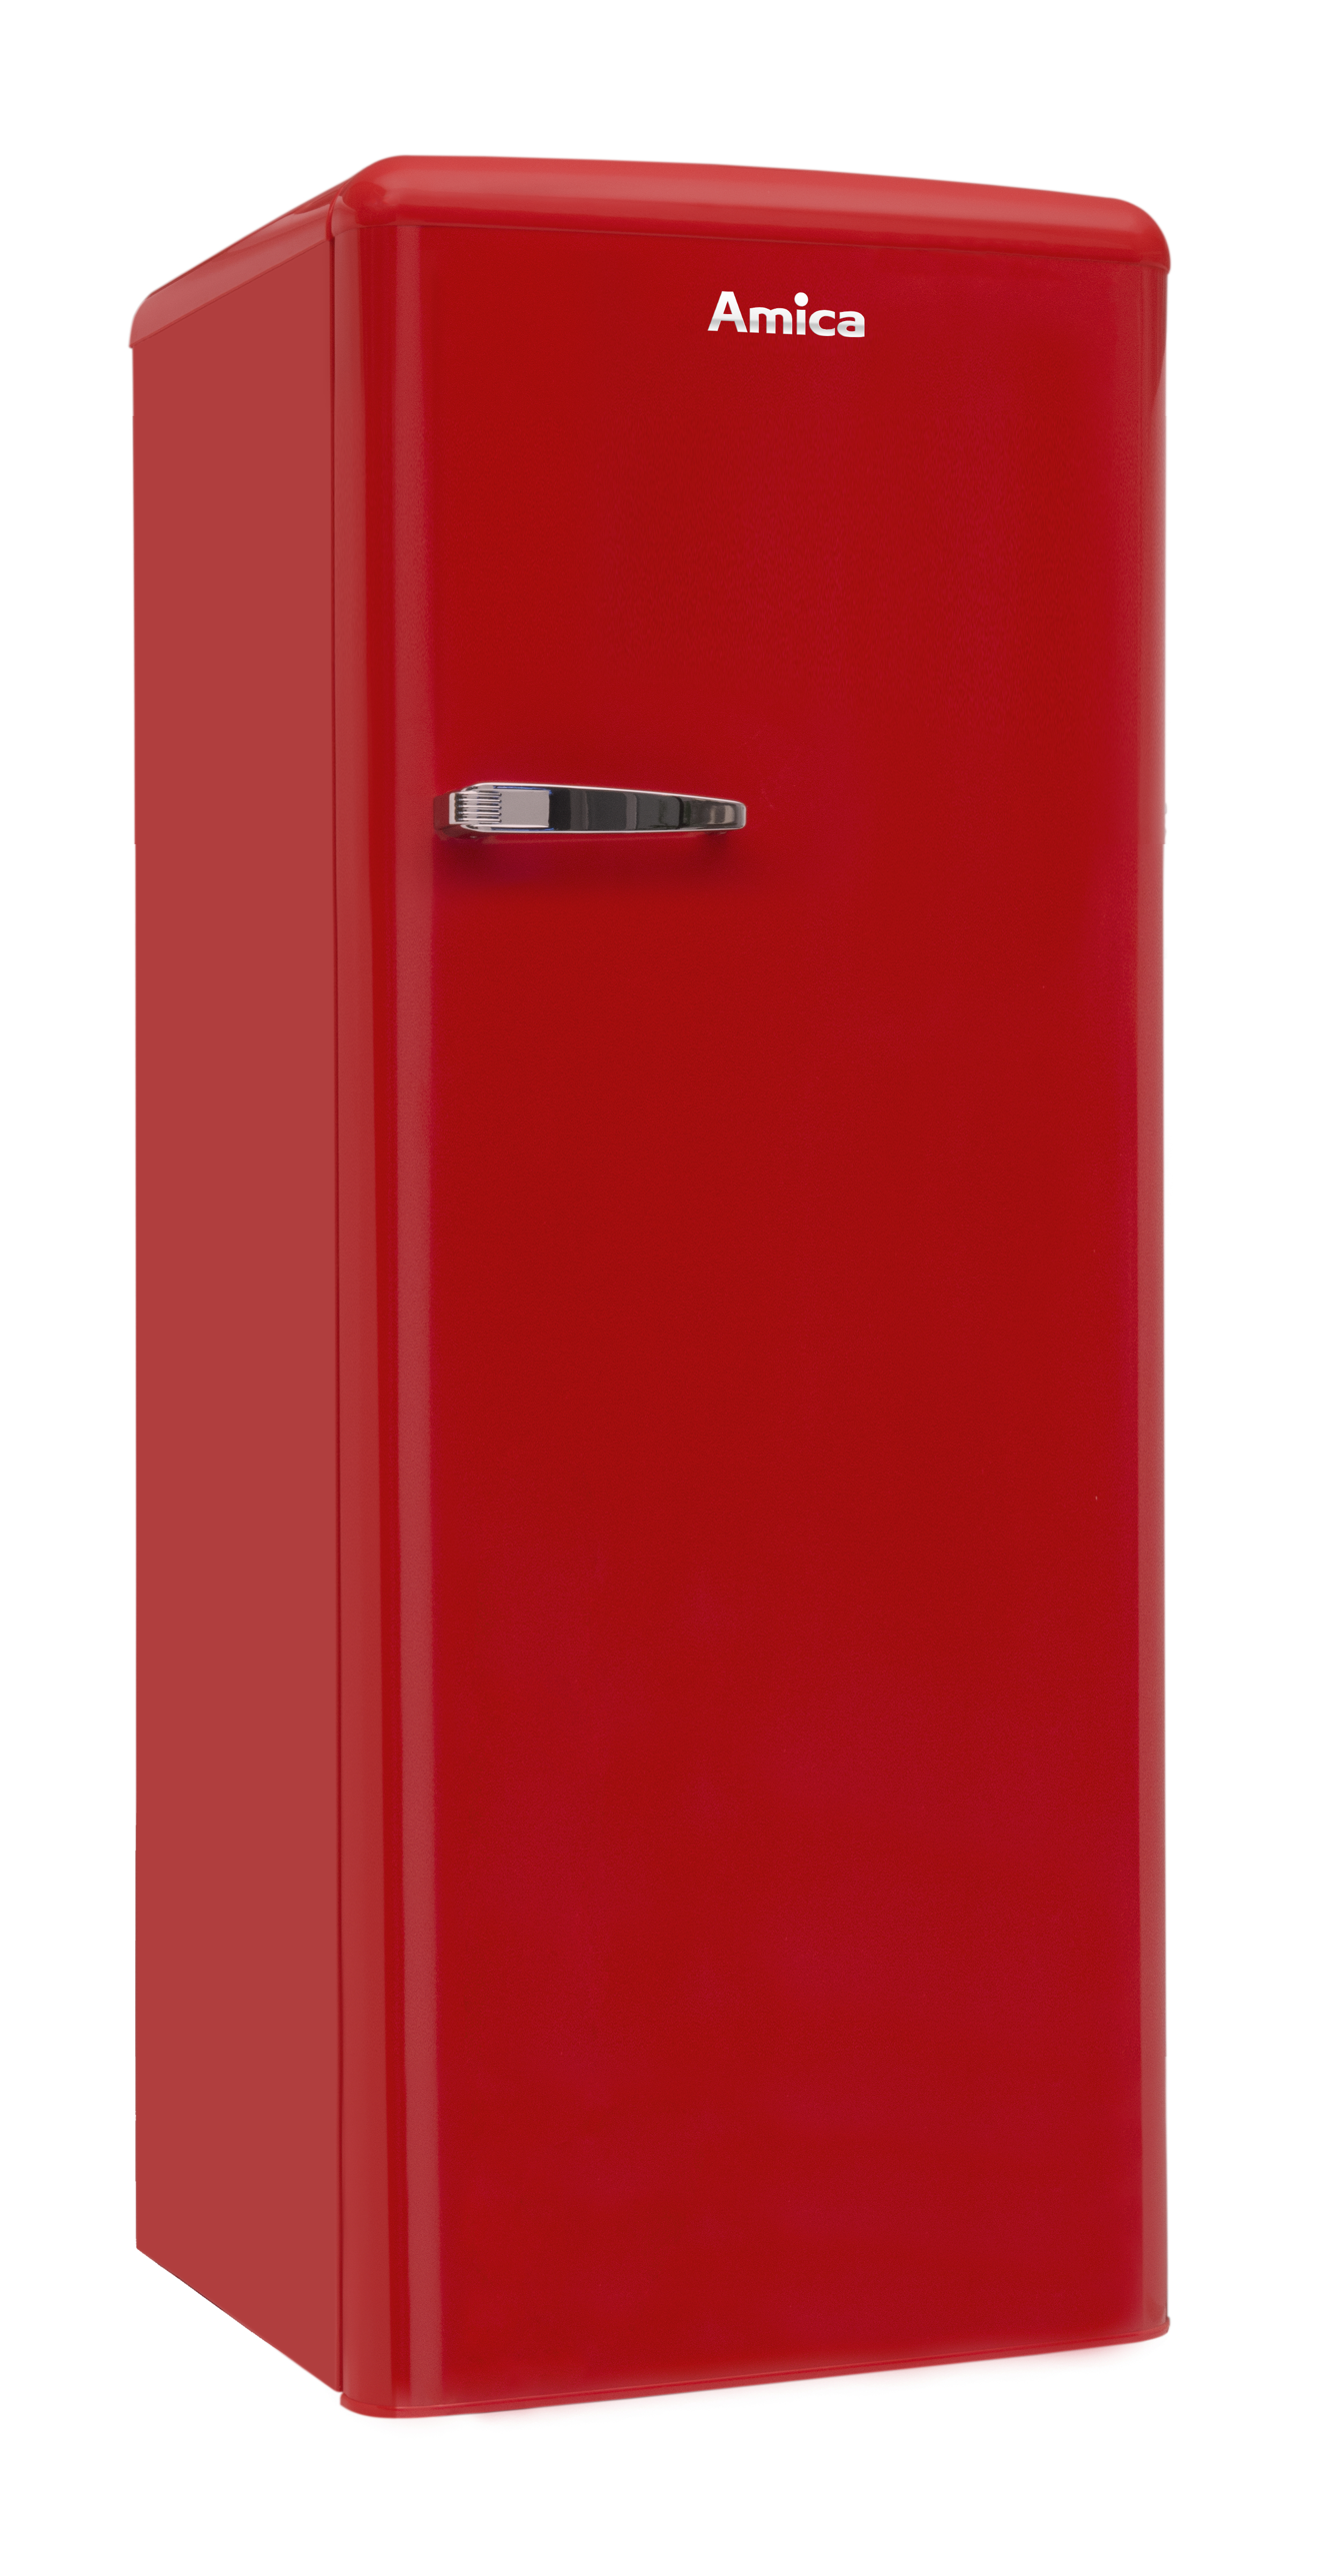 AMICA KSR 364 Edition (E, Kühlschrank Red) R 150 Retro hoch, Chili mm 1440